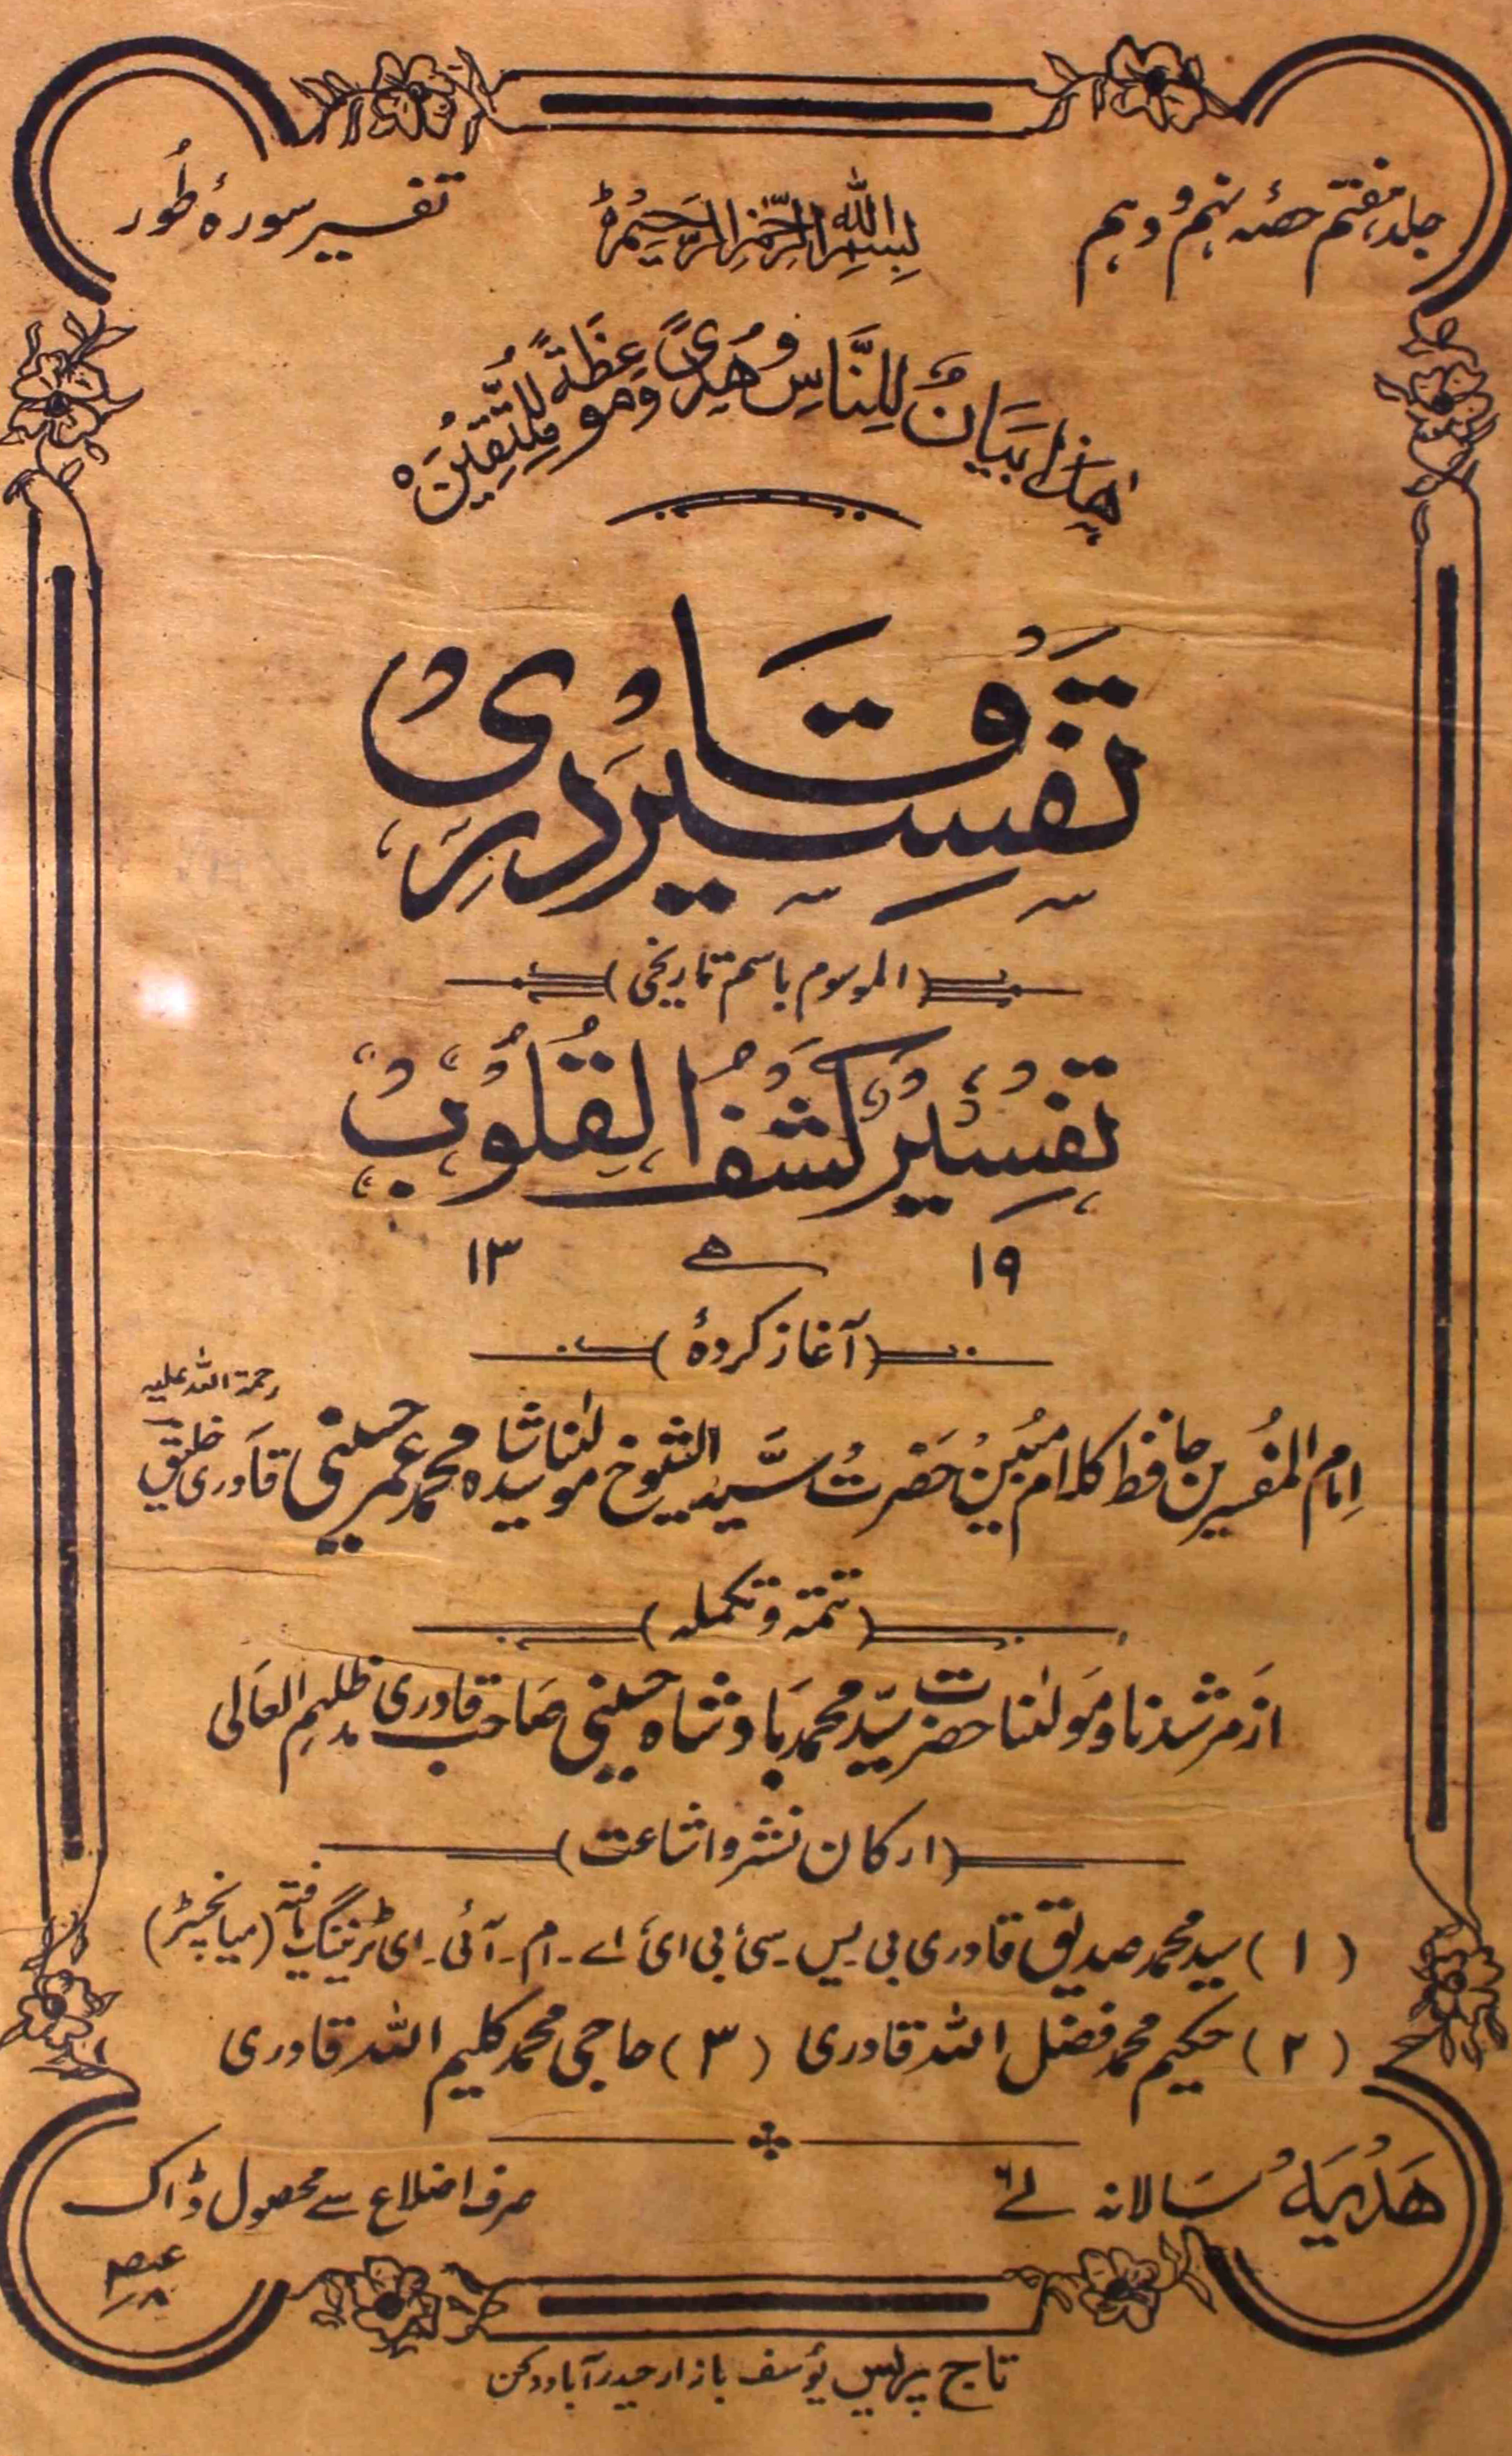 tafseer-ul-qadri-shumara-number-09-010-mohammad-umar-husaini-magazines